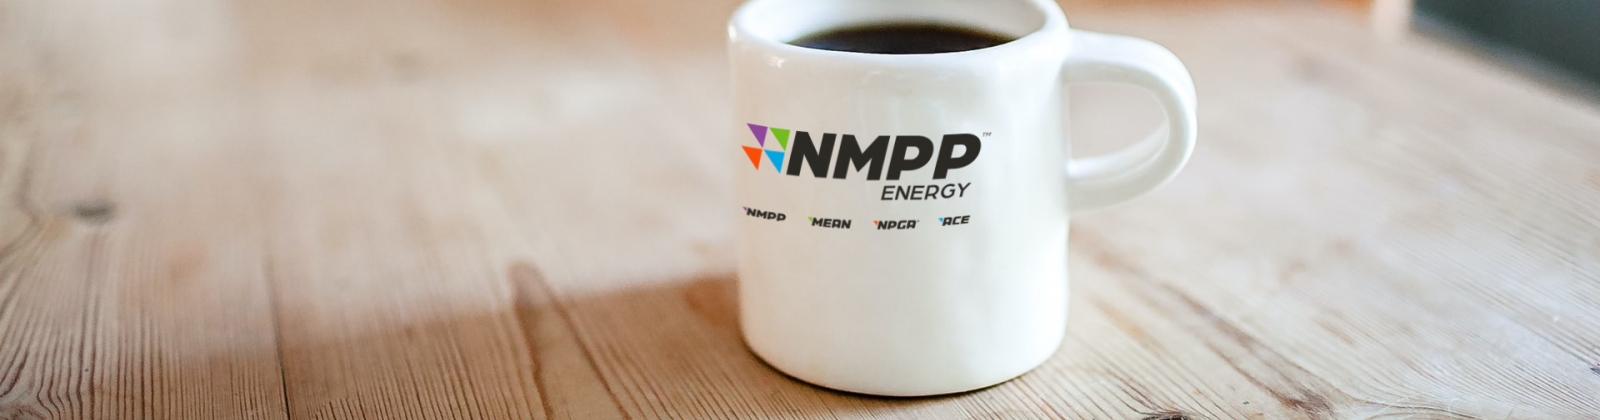 NMPP Energy coffee cup